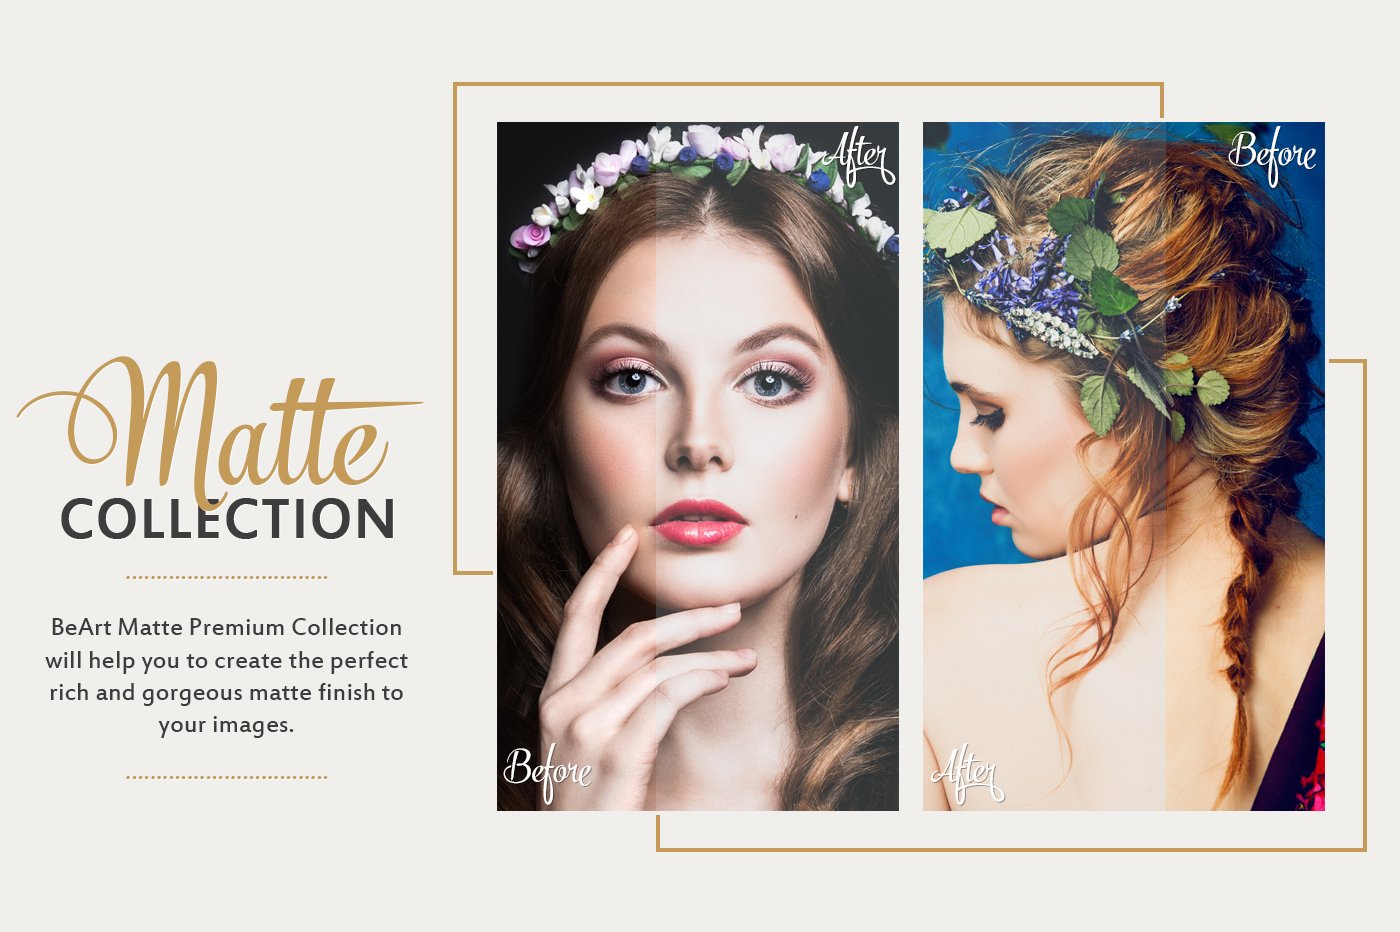 Matte Premium Photoshop Actionspreview image.